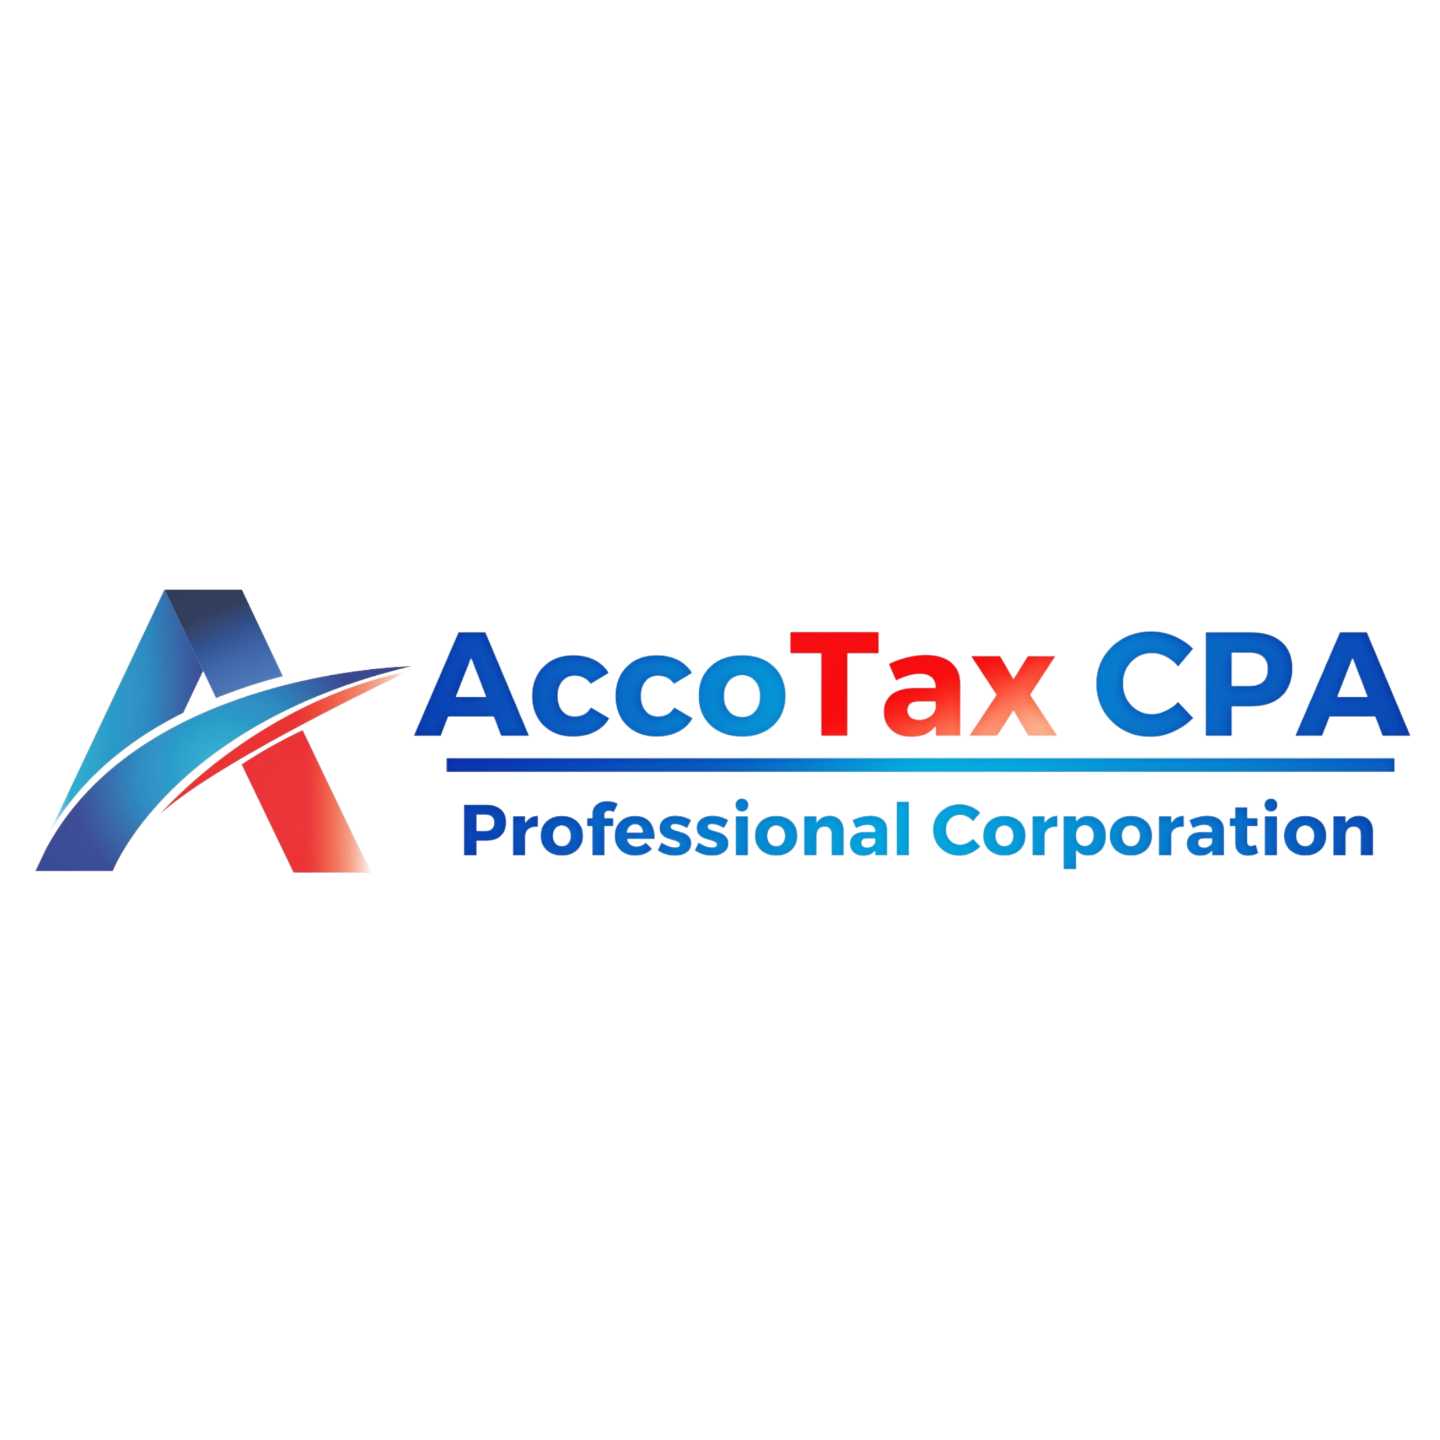 AccoTax CPA Professional Corporation Logo